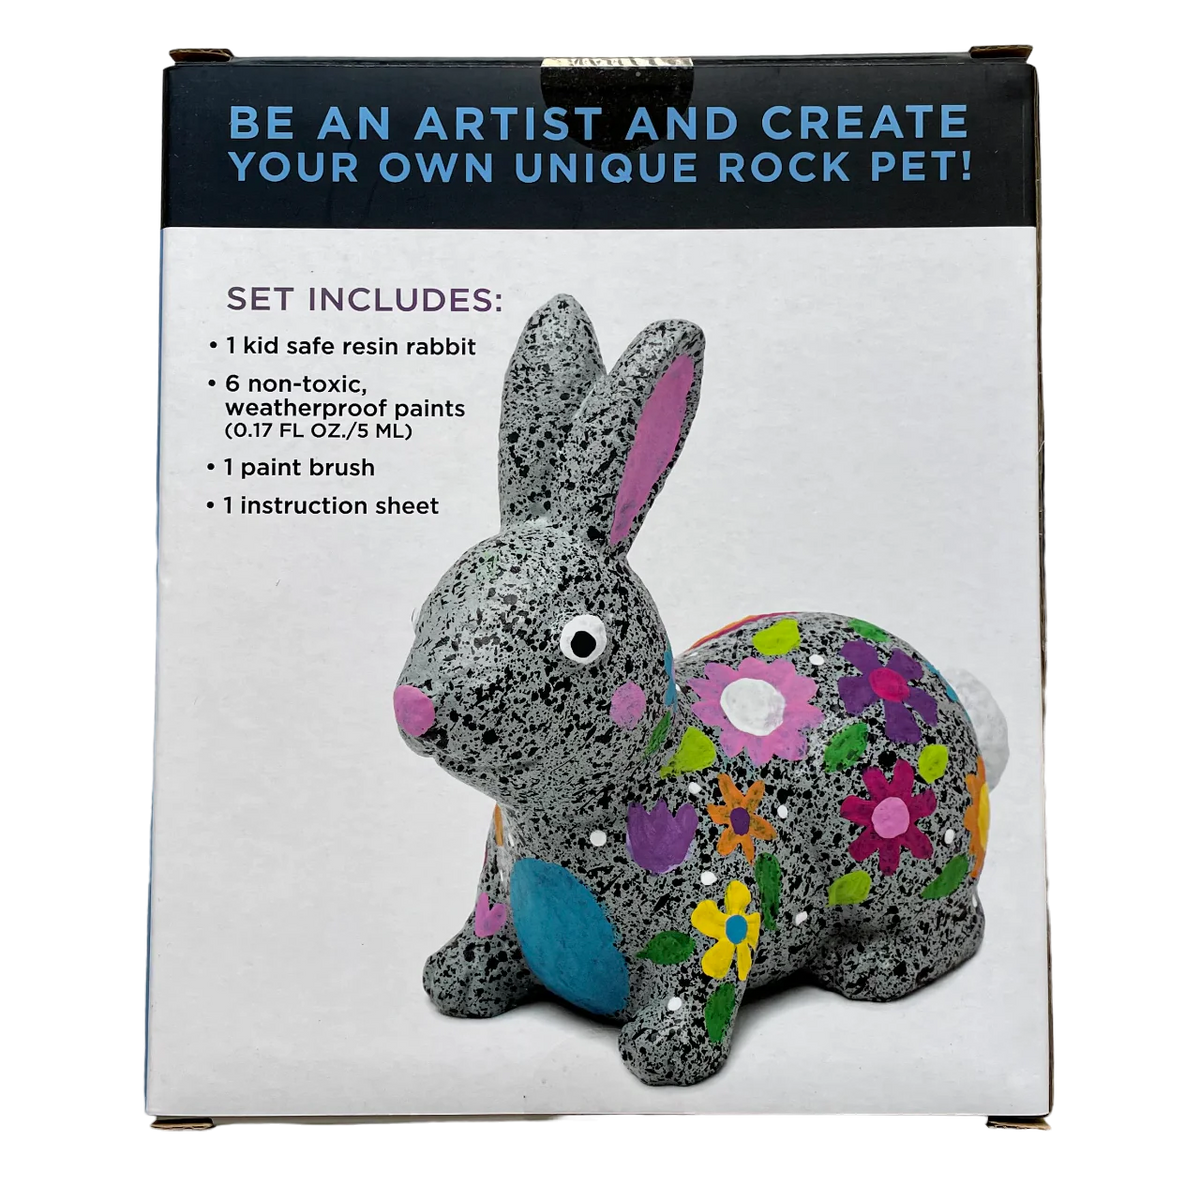 Rock Pets - Rabbit